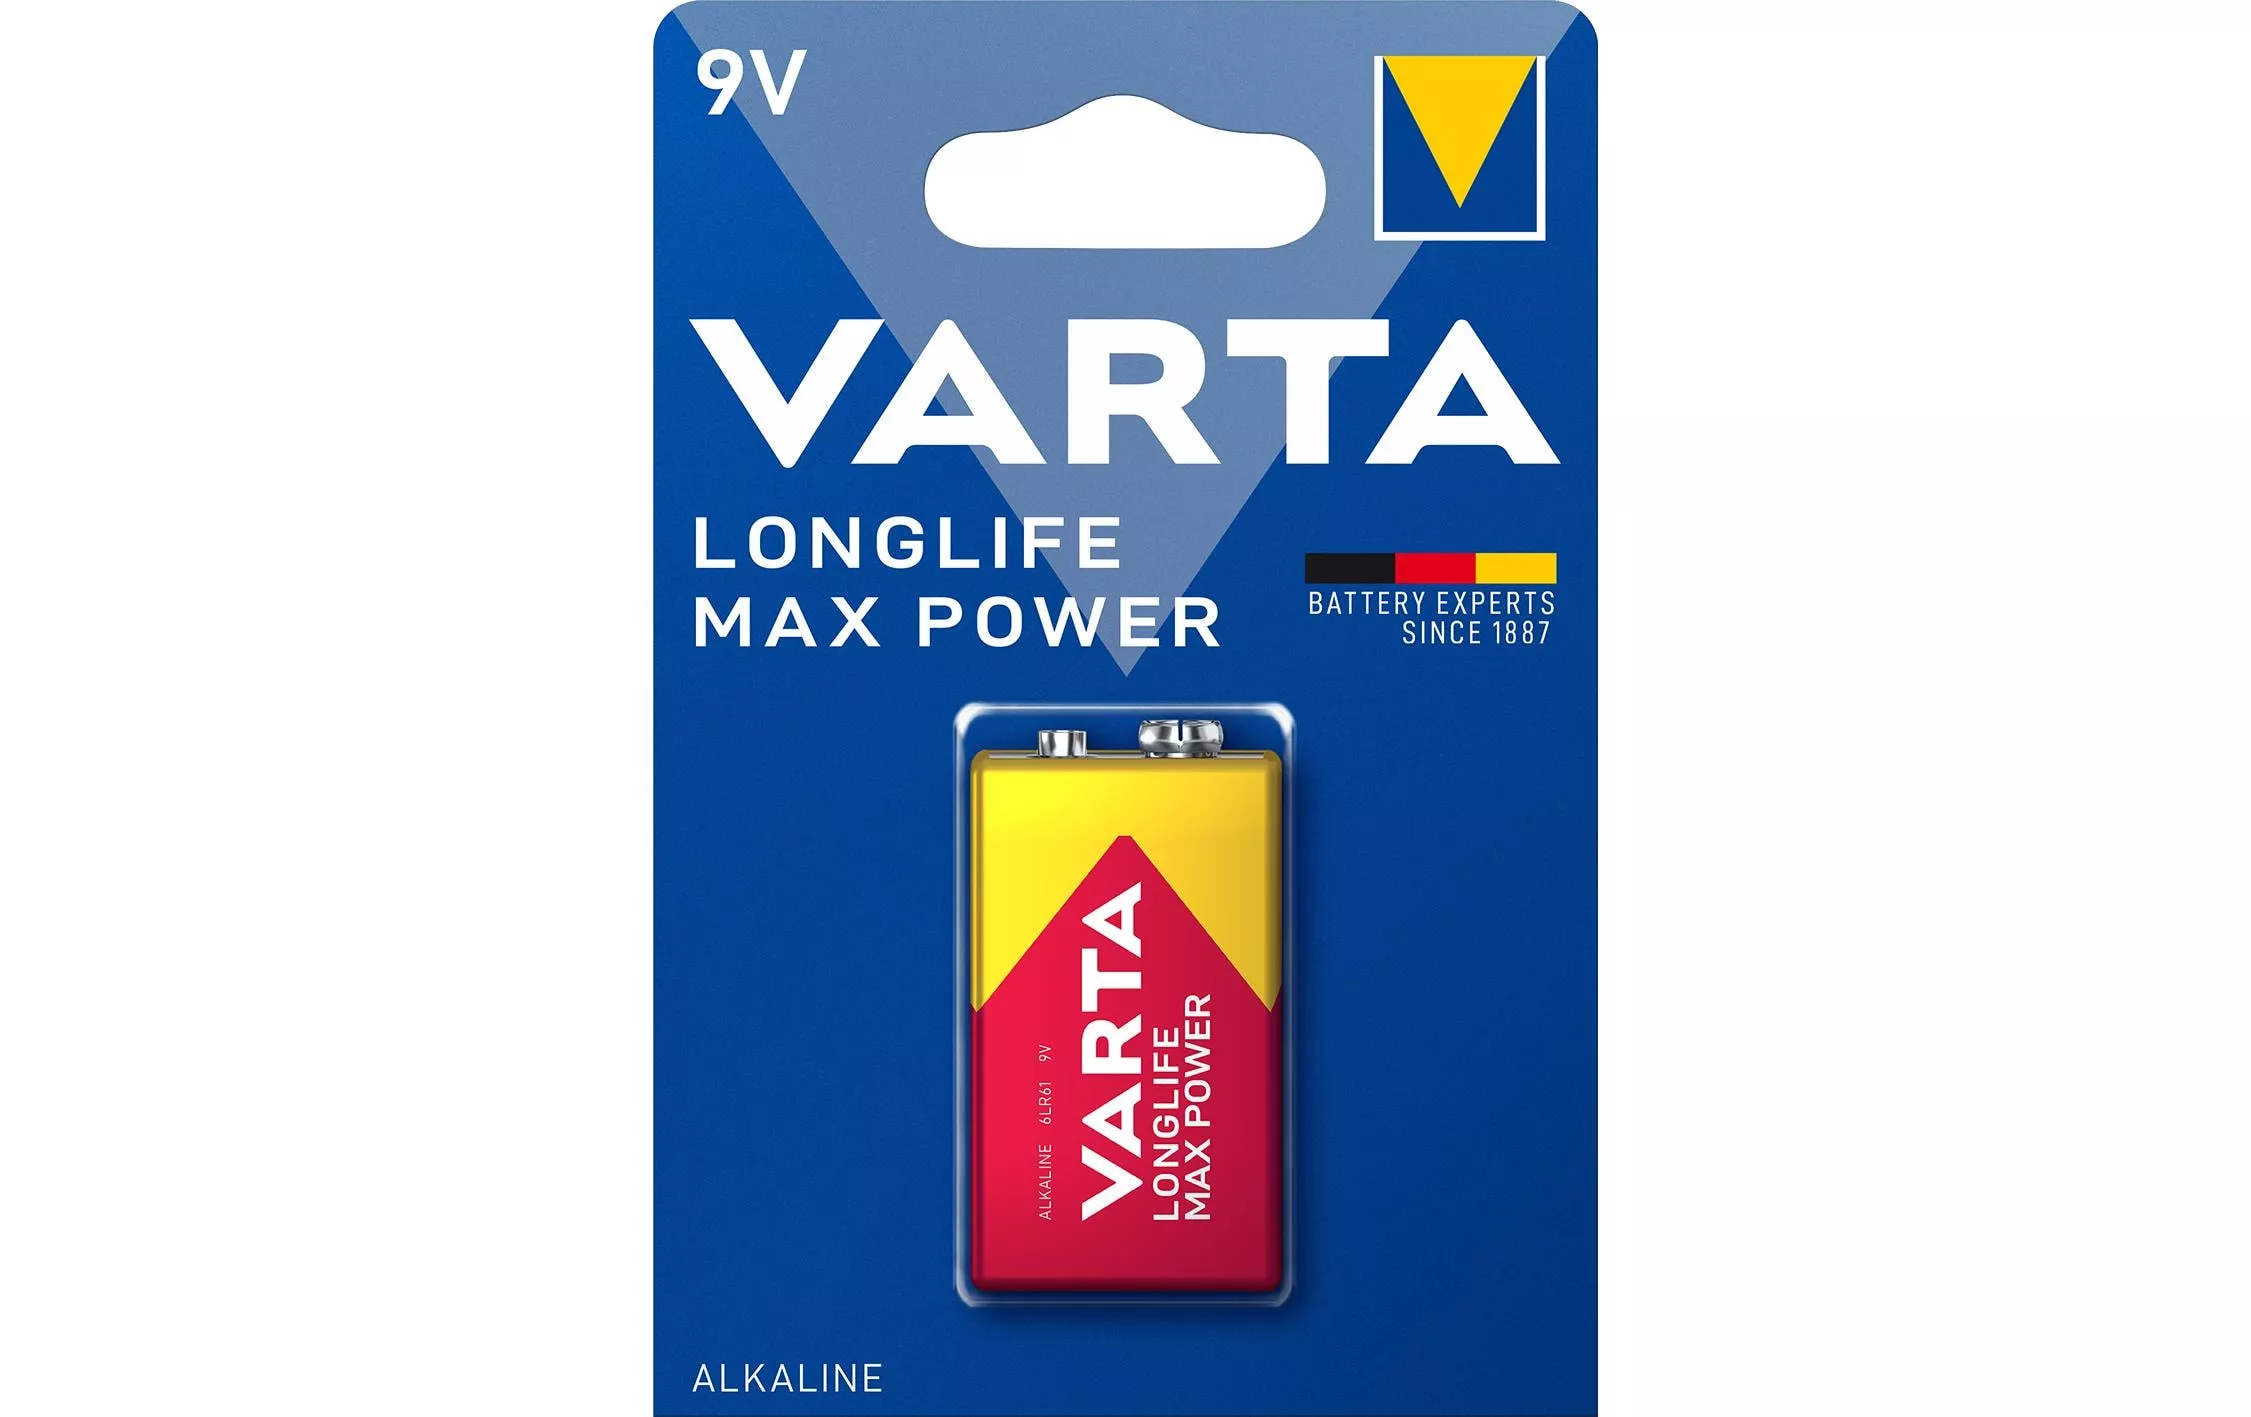 Batterie Longlife Max Power 9V 1 Stück